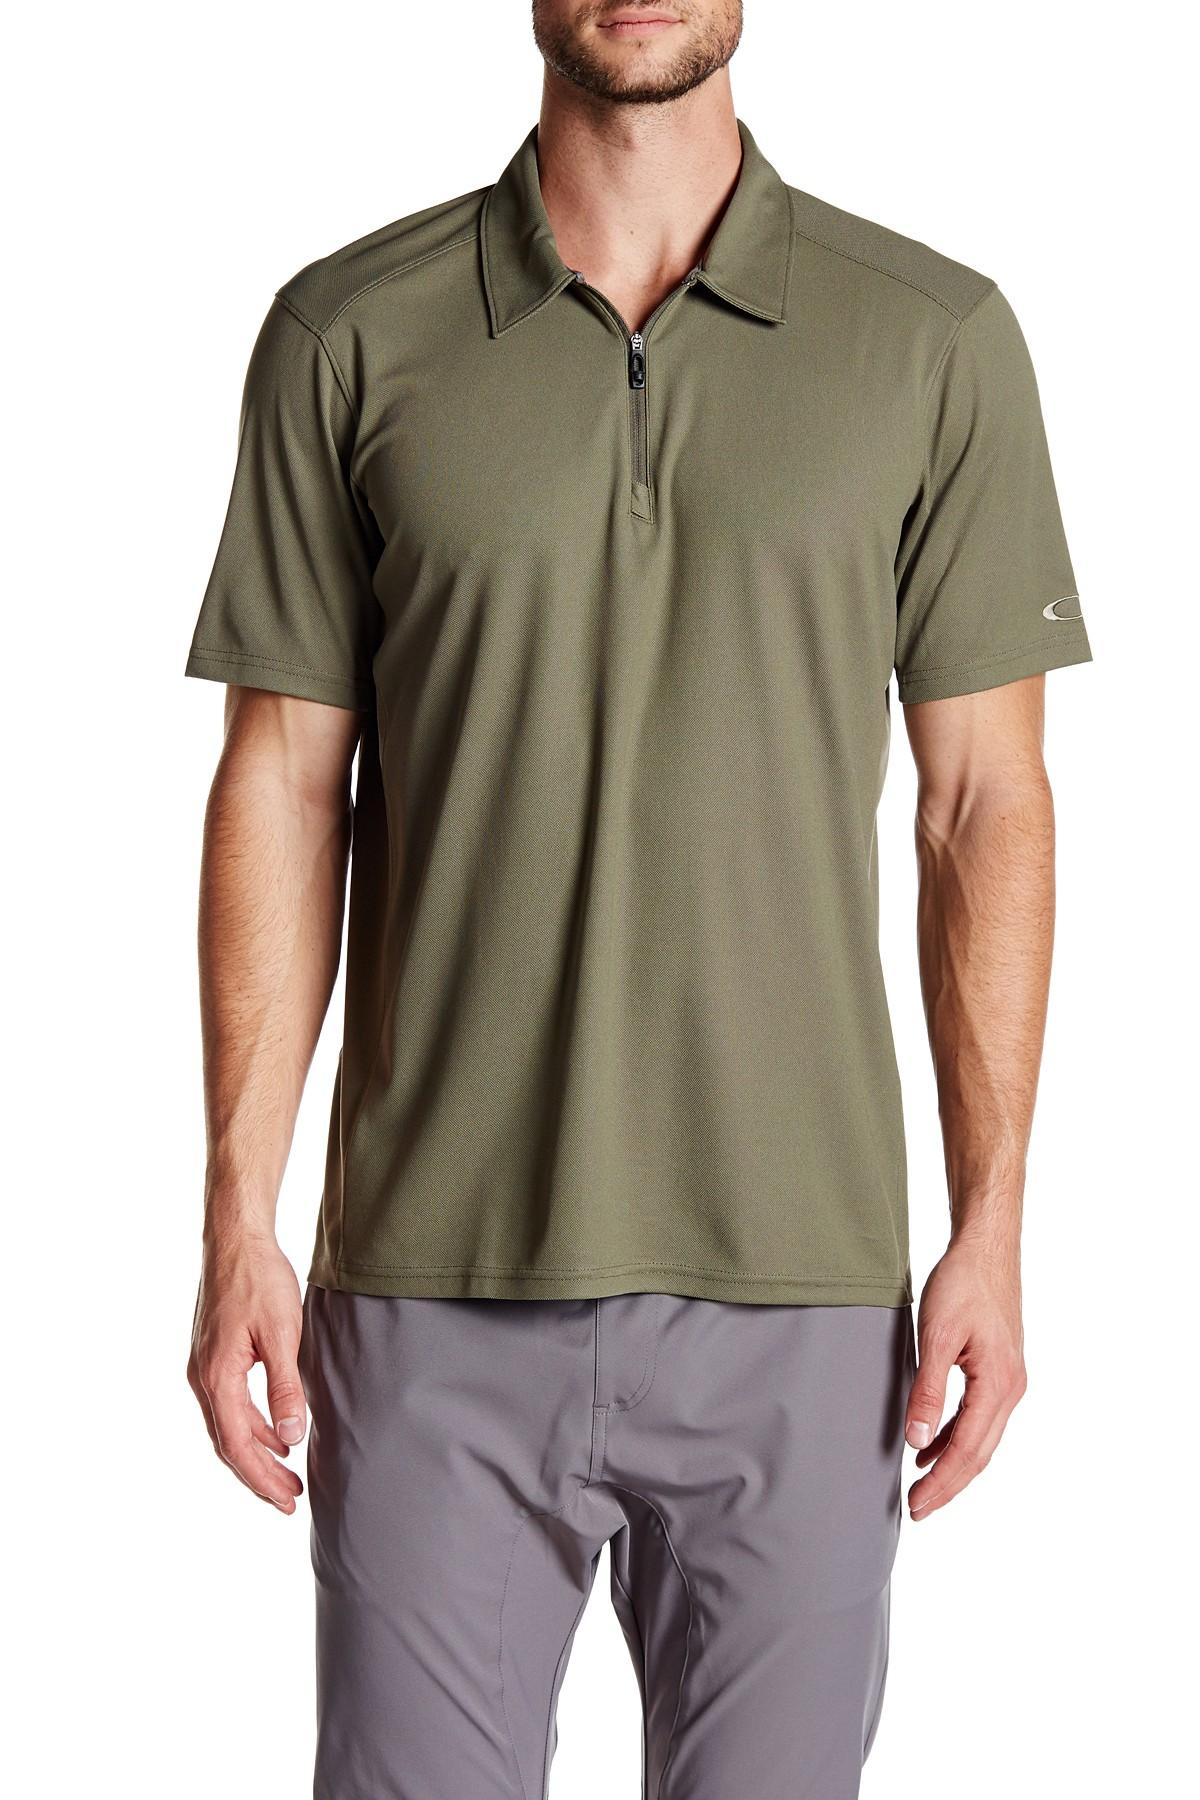 Oakley Synthetic 1/4 Zip Polo Shirt in Green for Men - Lyst